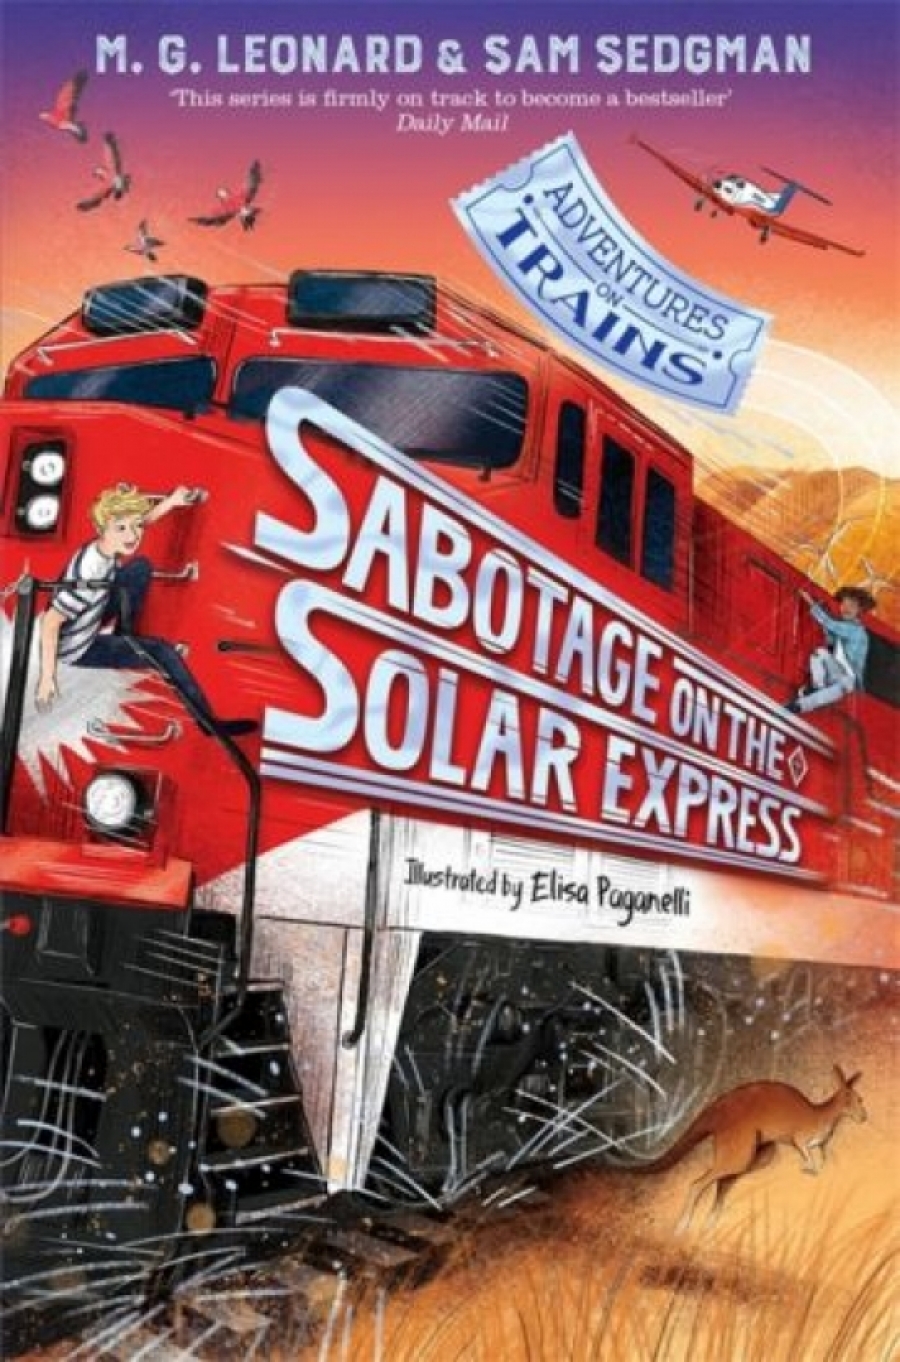 Leonard M. G. Sabotage on the Solar Express 